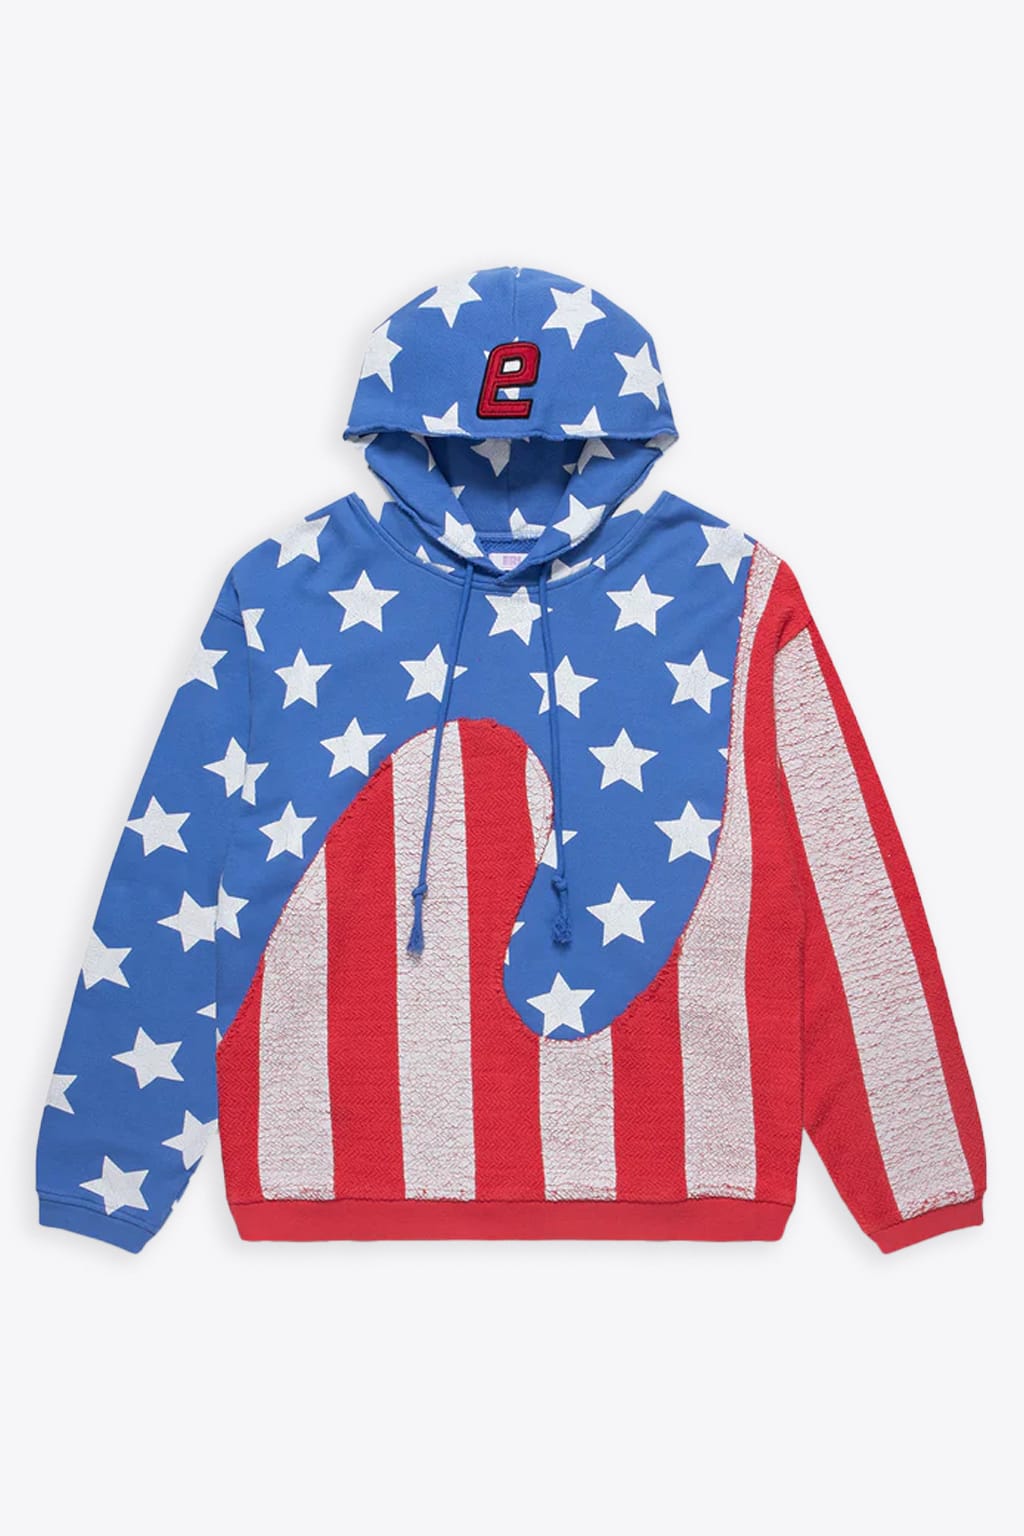 Unisex Stars And Stripes Hood American flag printed swirl hoodie - Unisex stars and striped hood